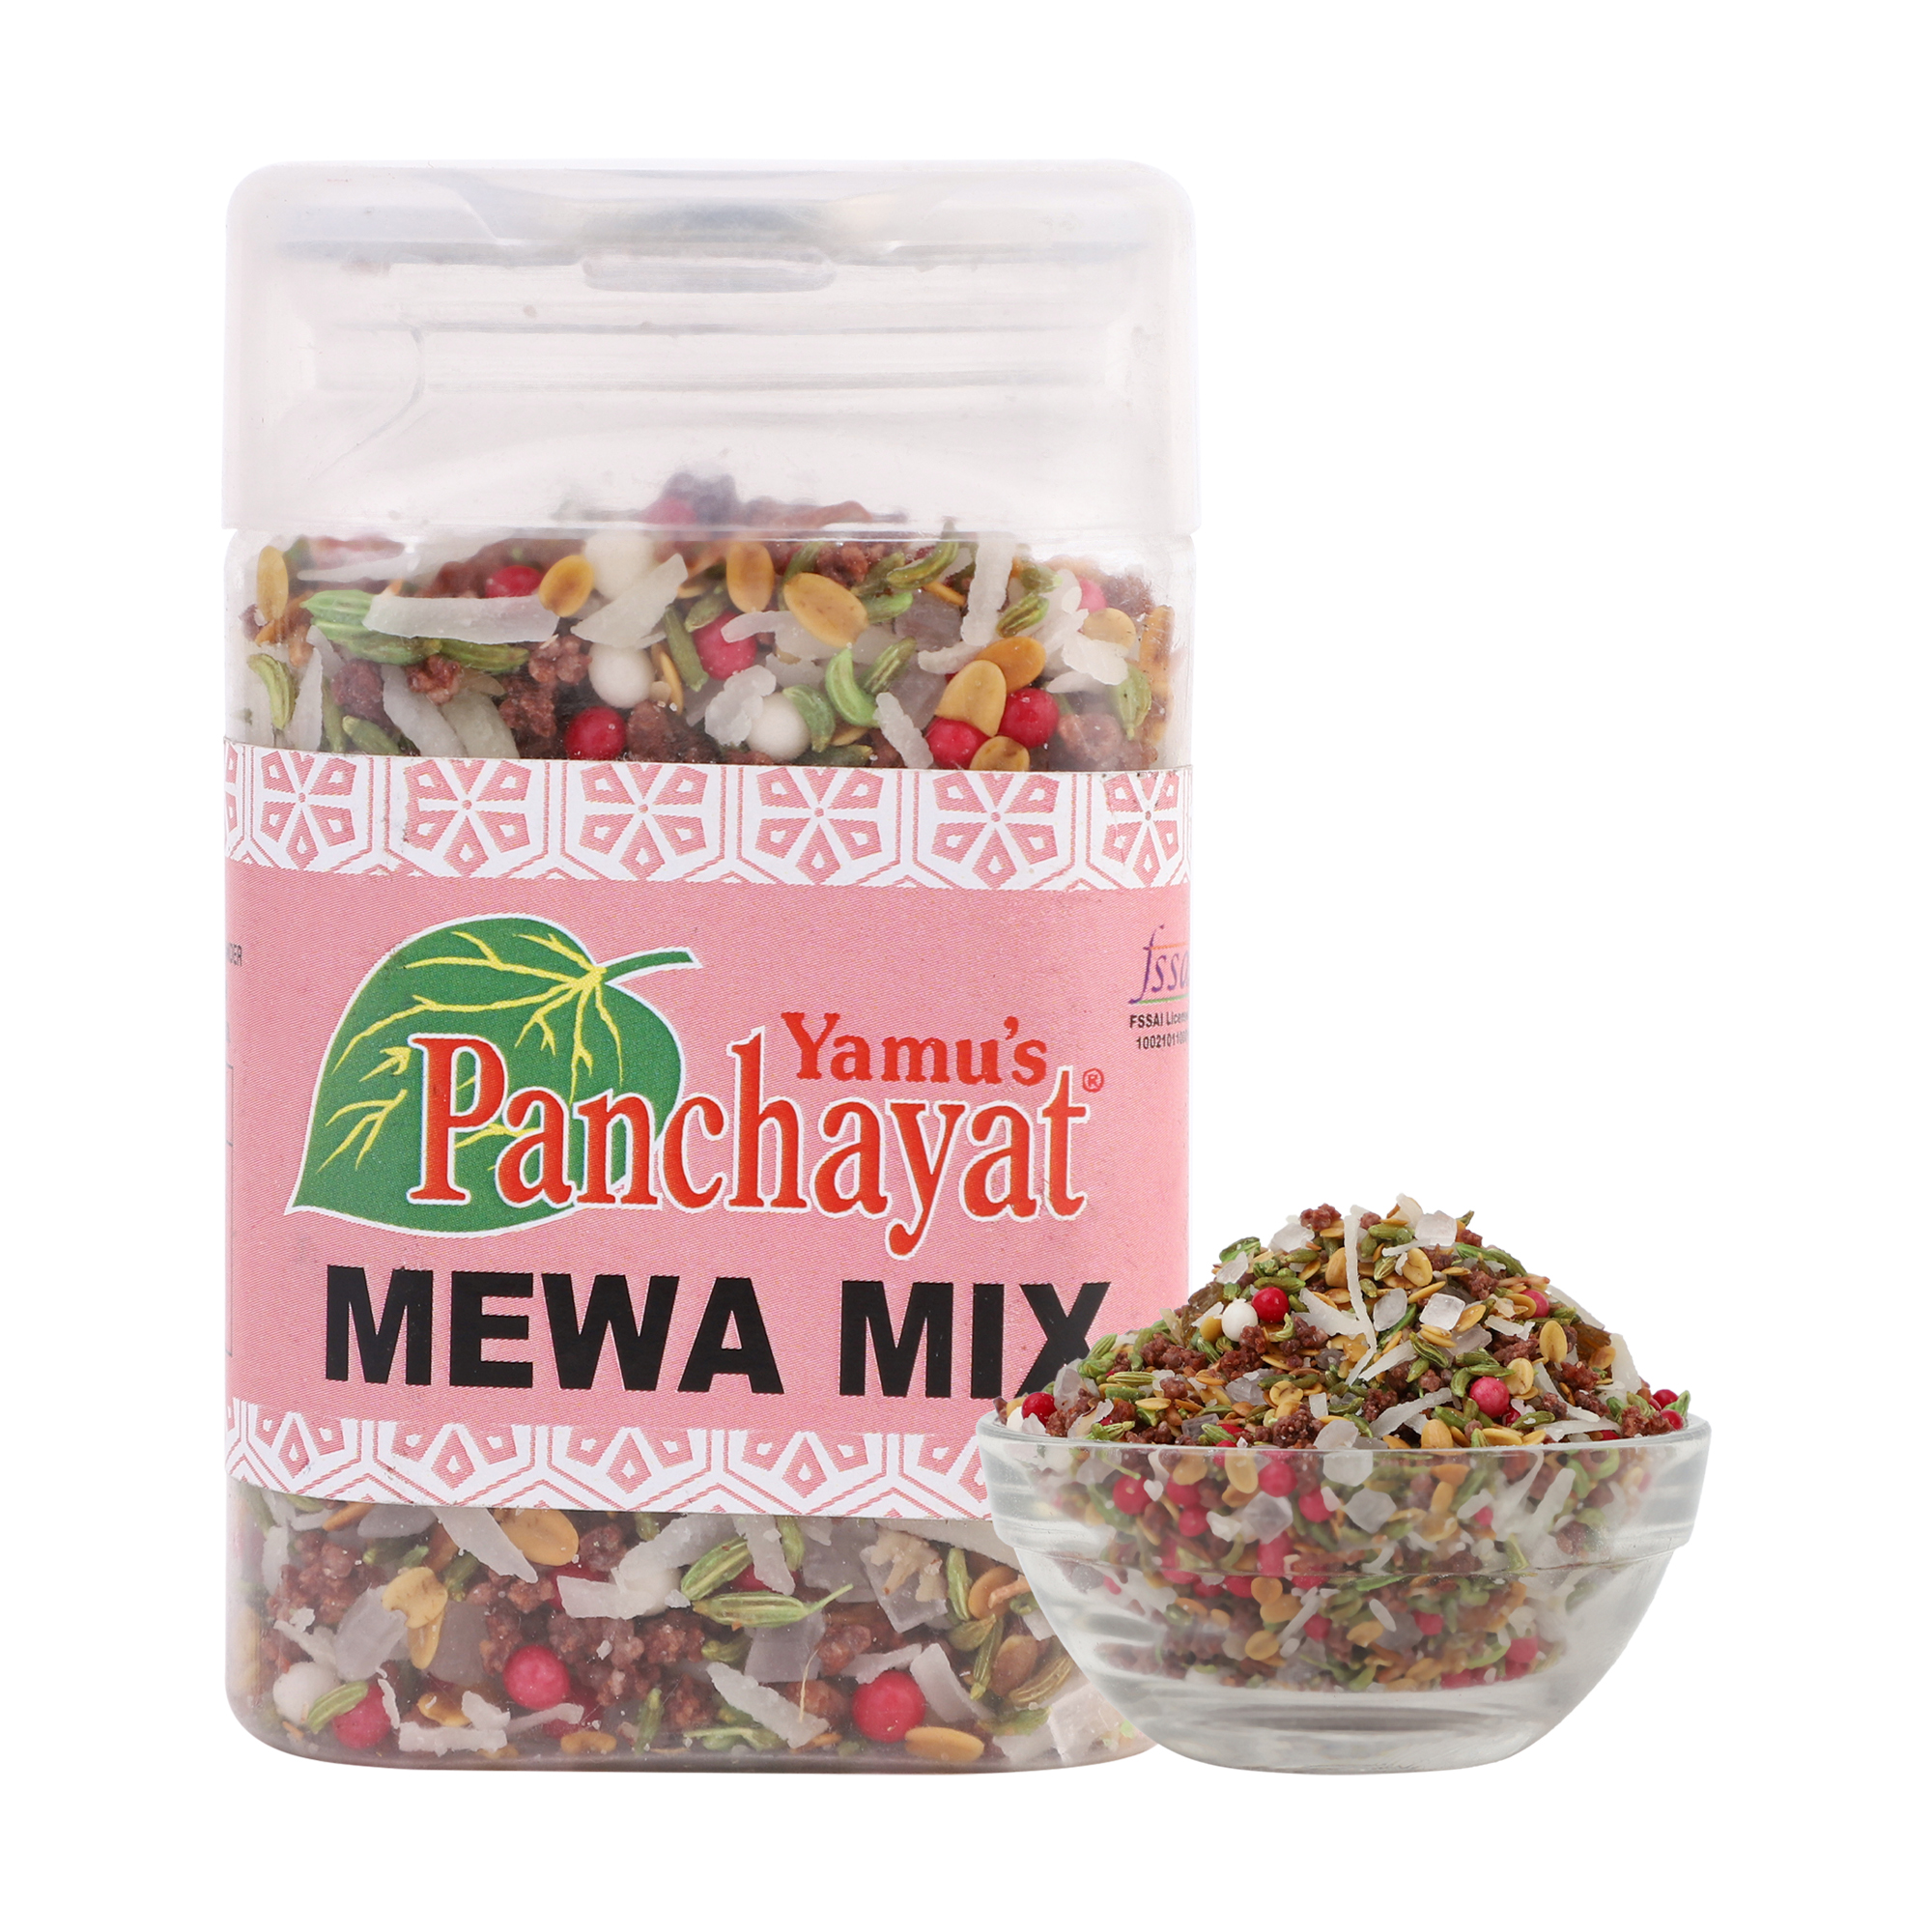 Mewa Mix